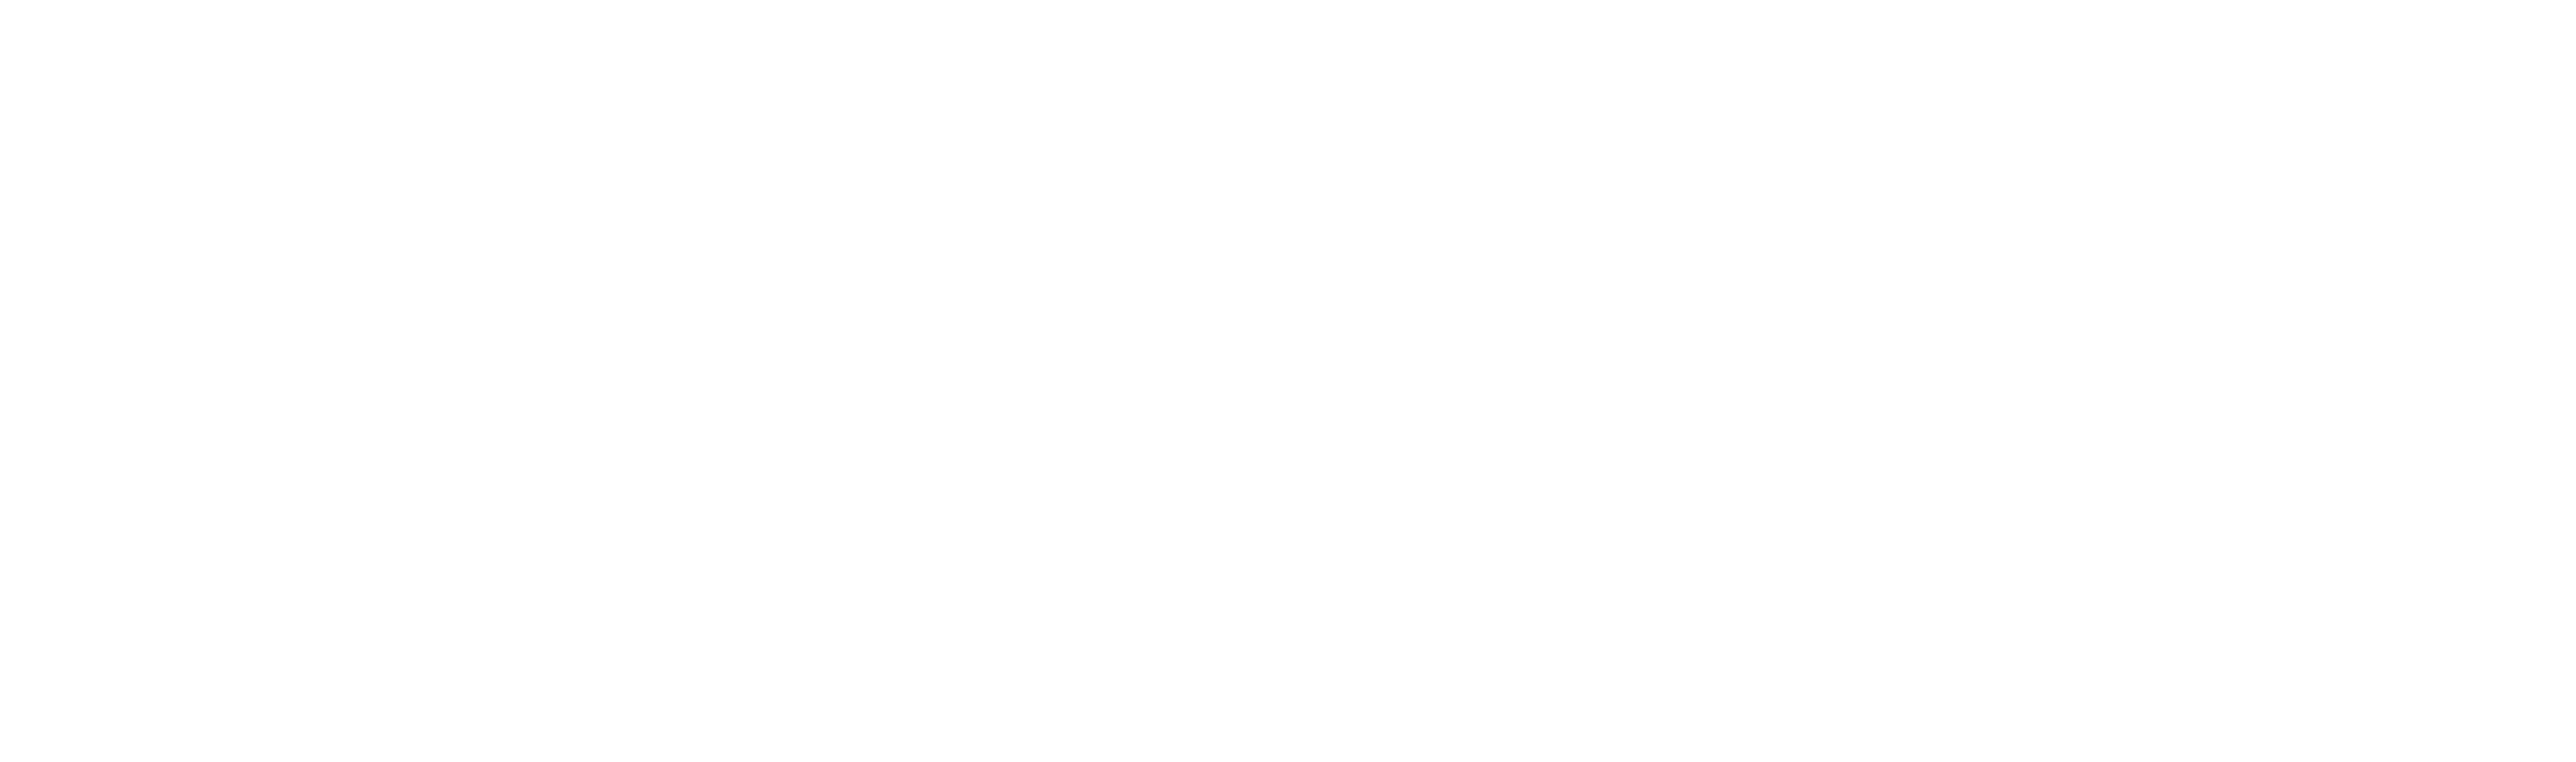 Destiny Giving